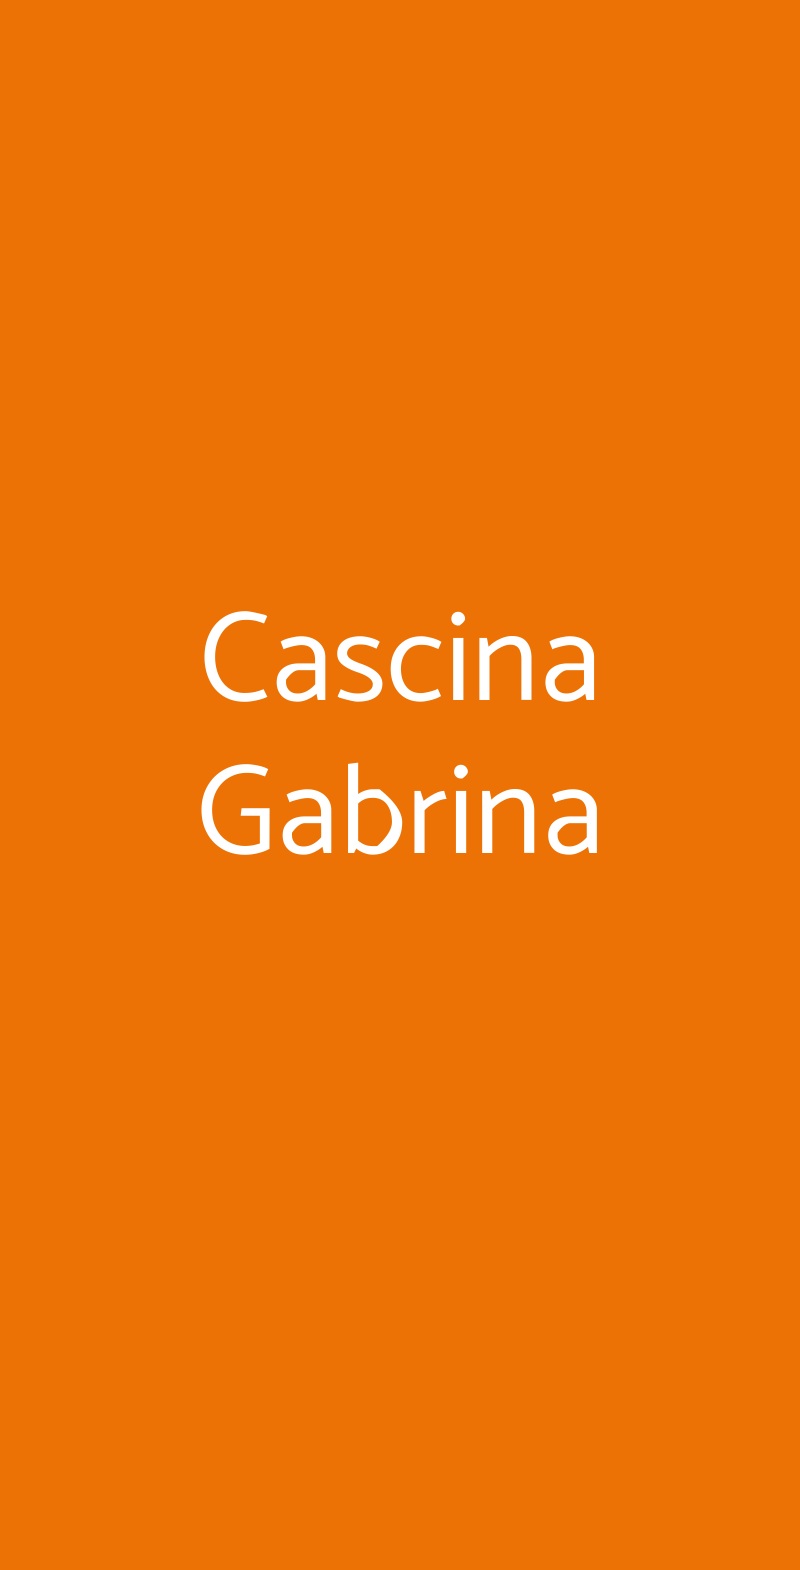 Cascina Gabrina Vanzago menù 1 pagina